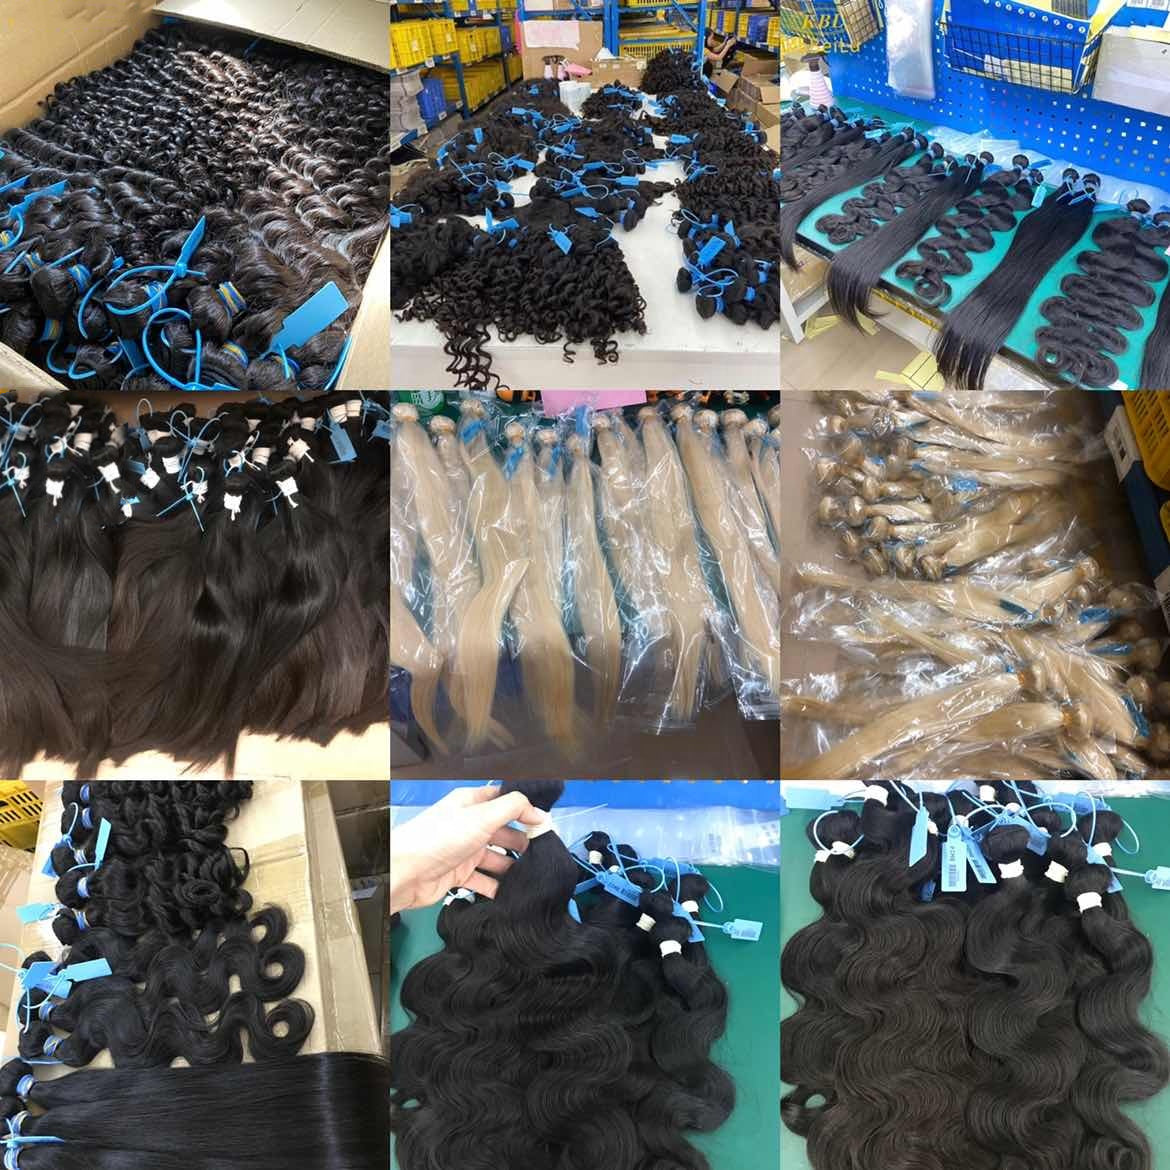 12A Brazilian Hair Jerry Curly 20-30-50 Pcs 100% Human Hair Bundles For Sale High Quality Wholesale